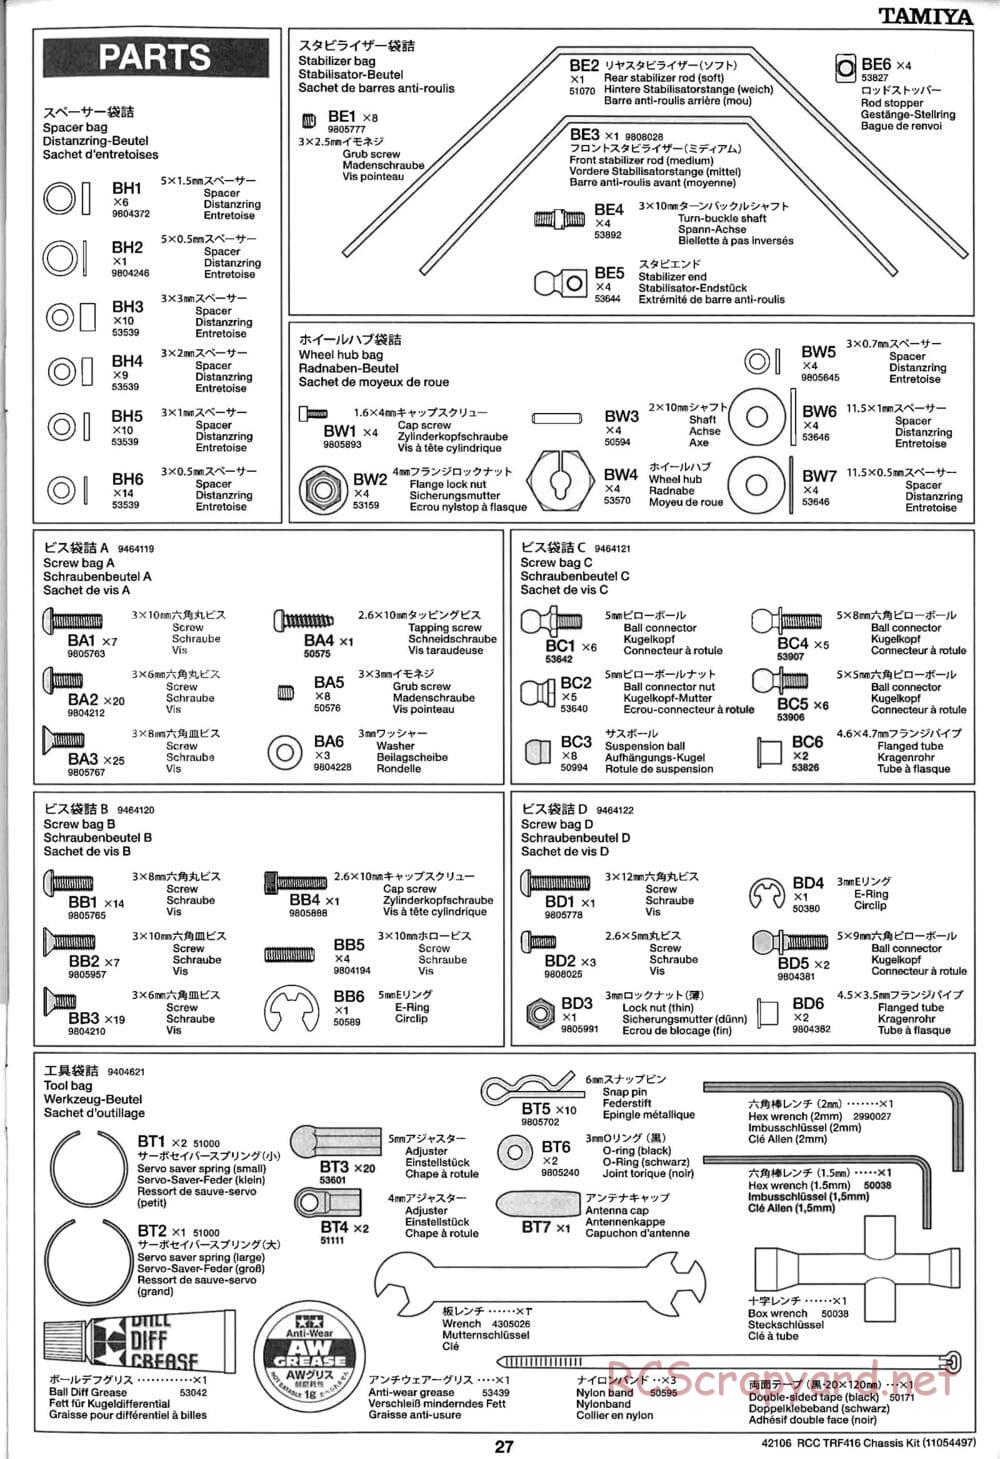 Tamiya - TRF416 Chassis - Manual - Page 27